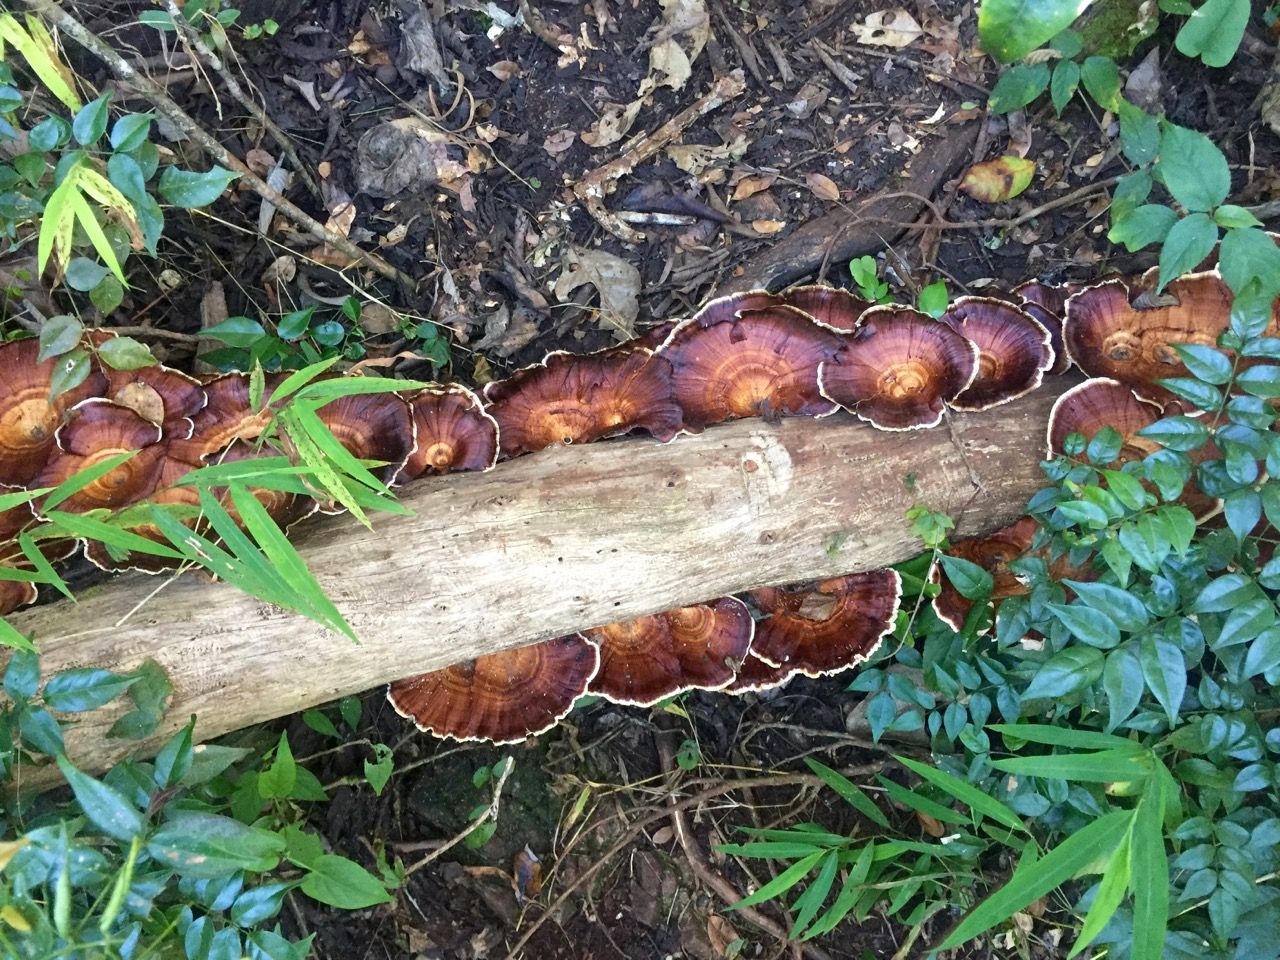 Mushrooms growing along a log.